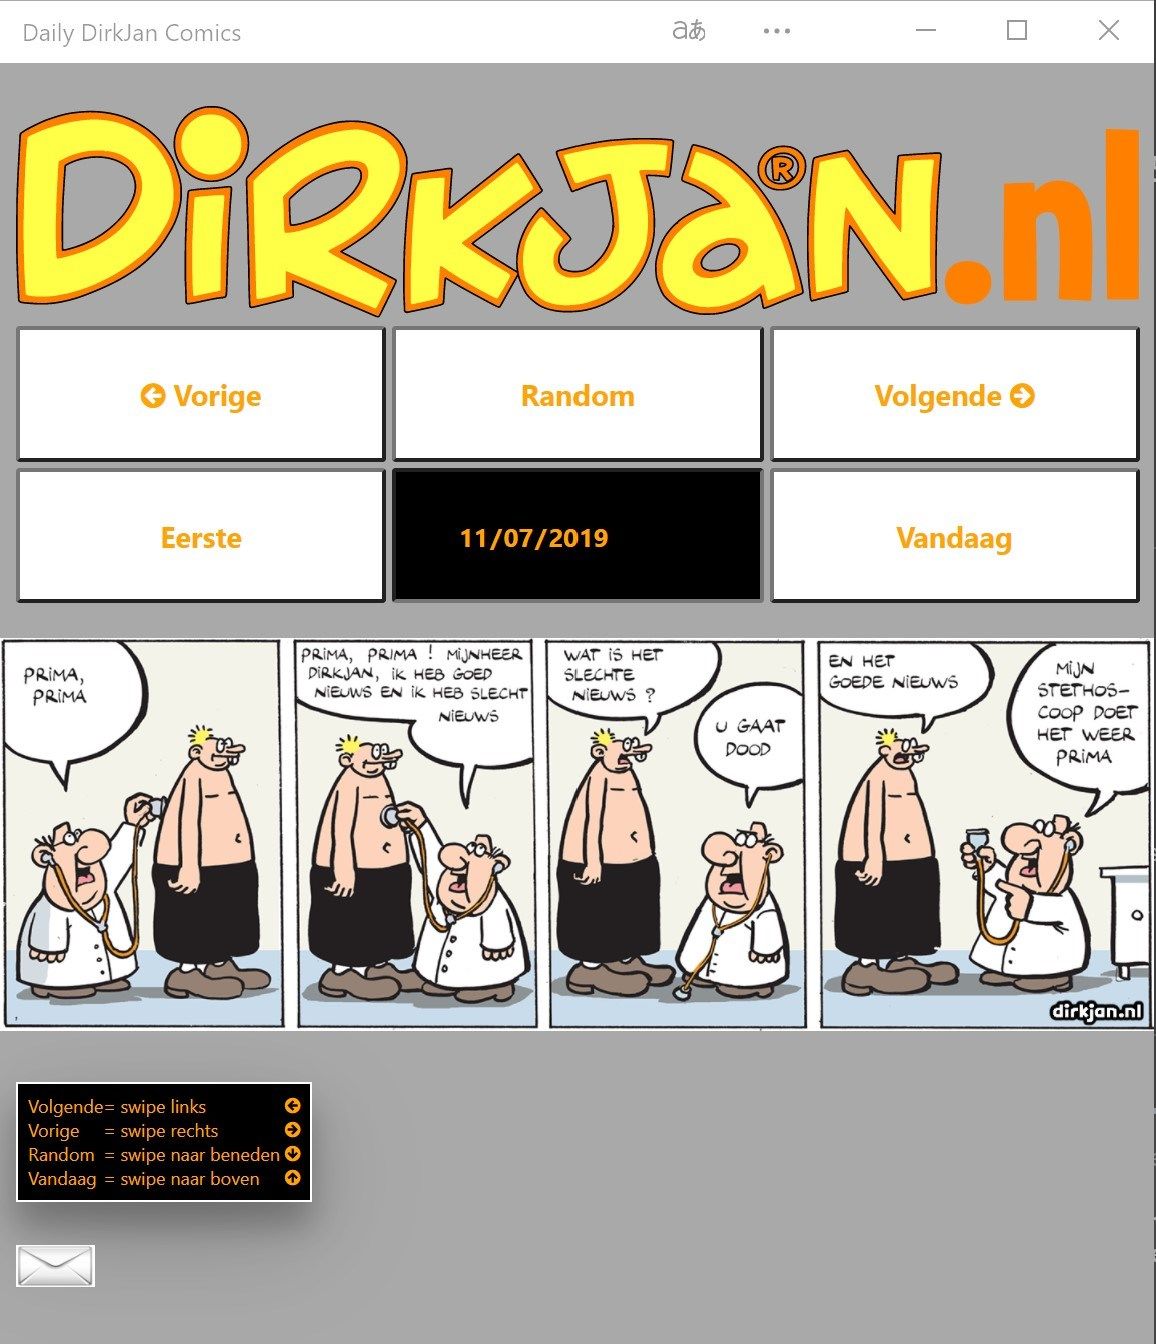 Daily DirkJan